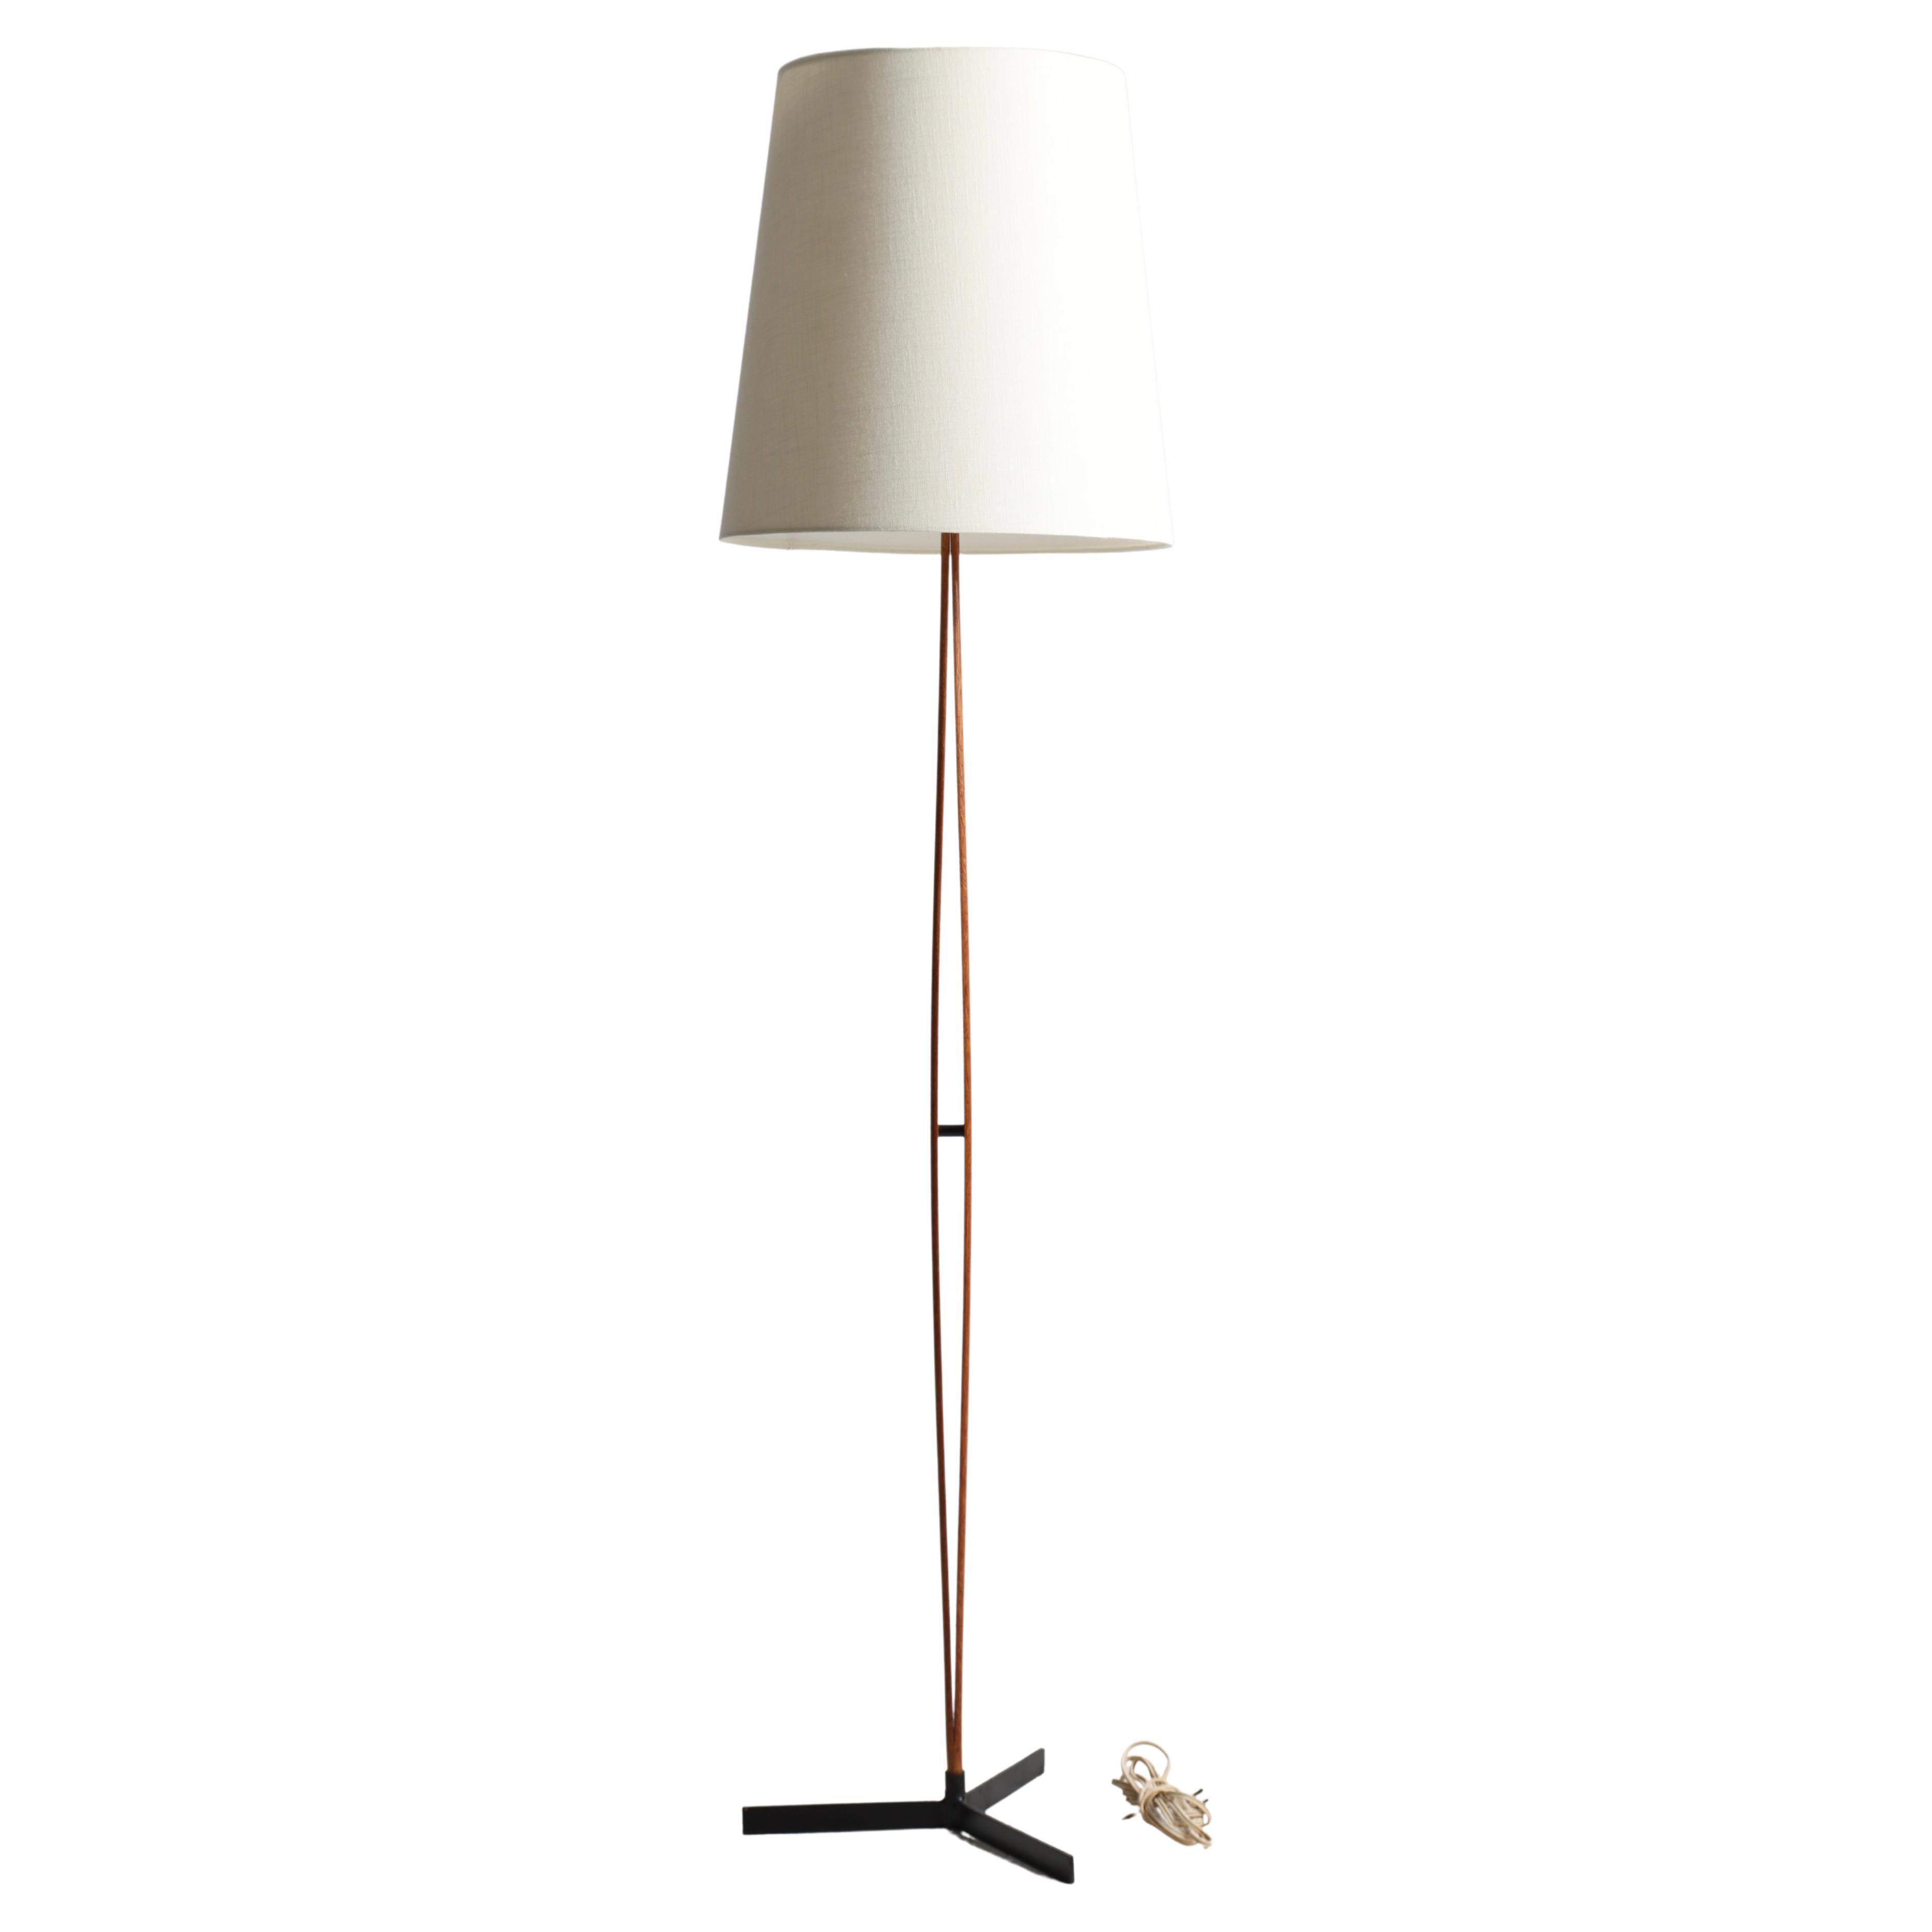 Danish Modern Midcentury Floor Lamp in Oak, Danish Design, 1950s For Sale